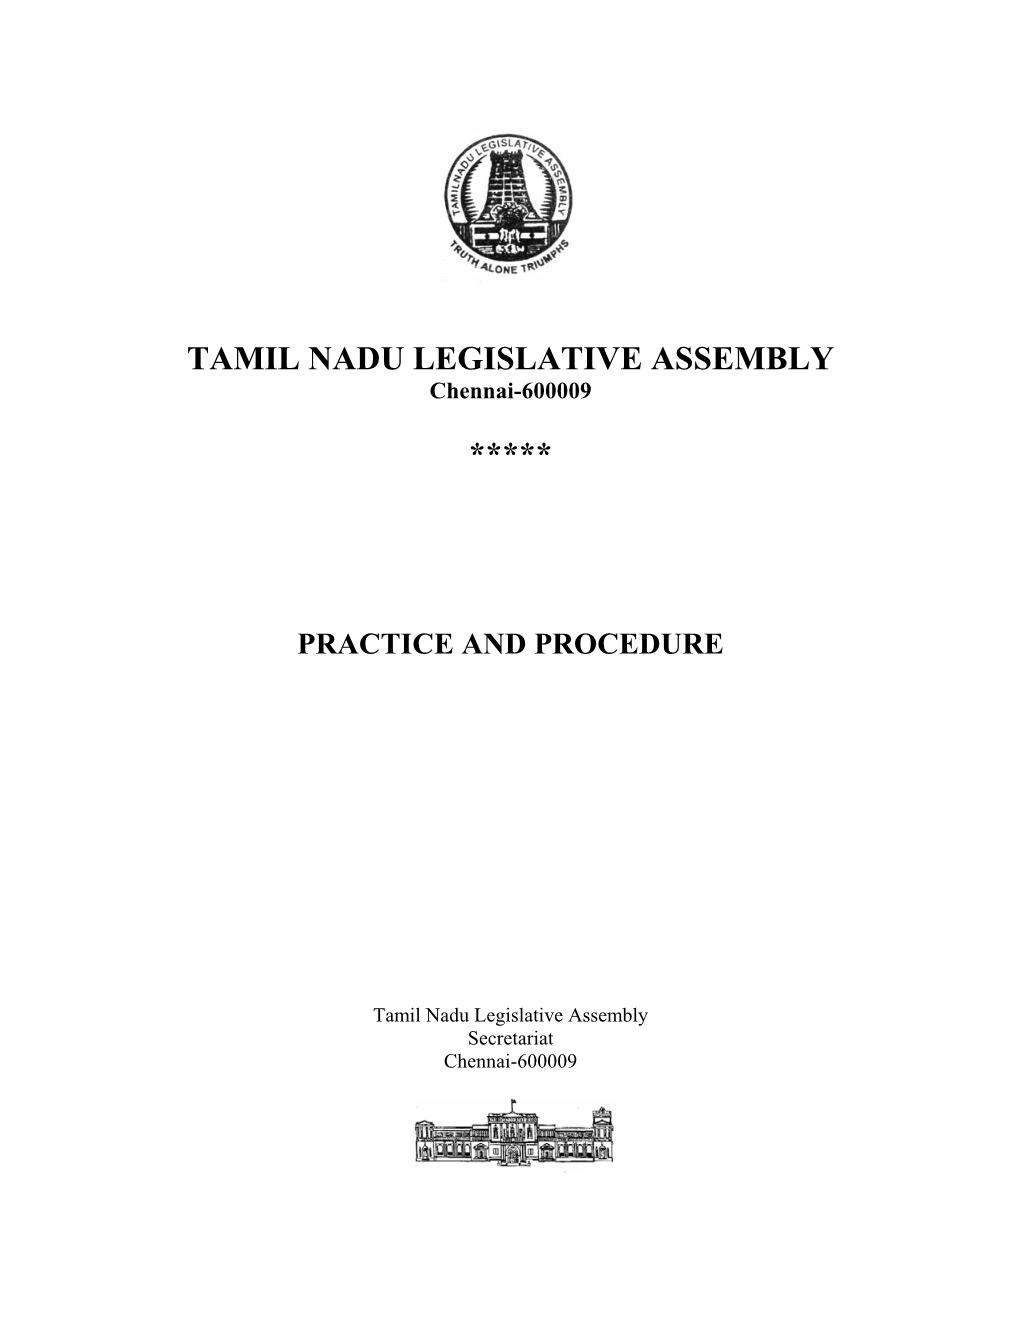 Practice and Procedure Document